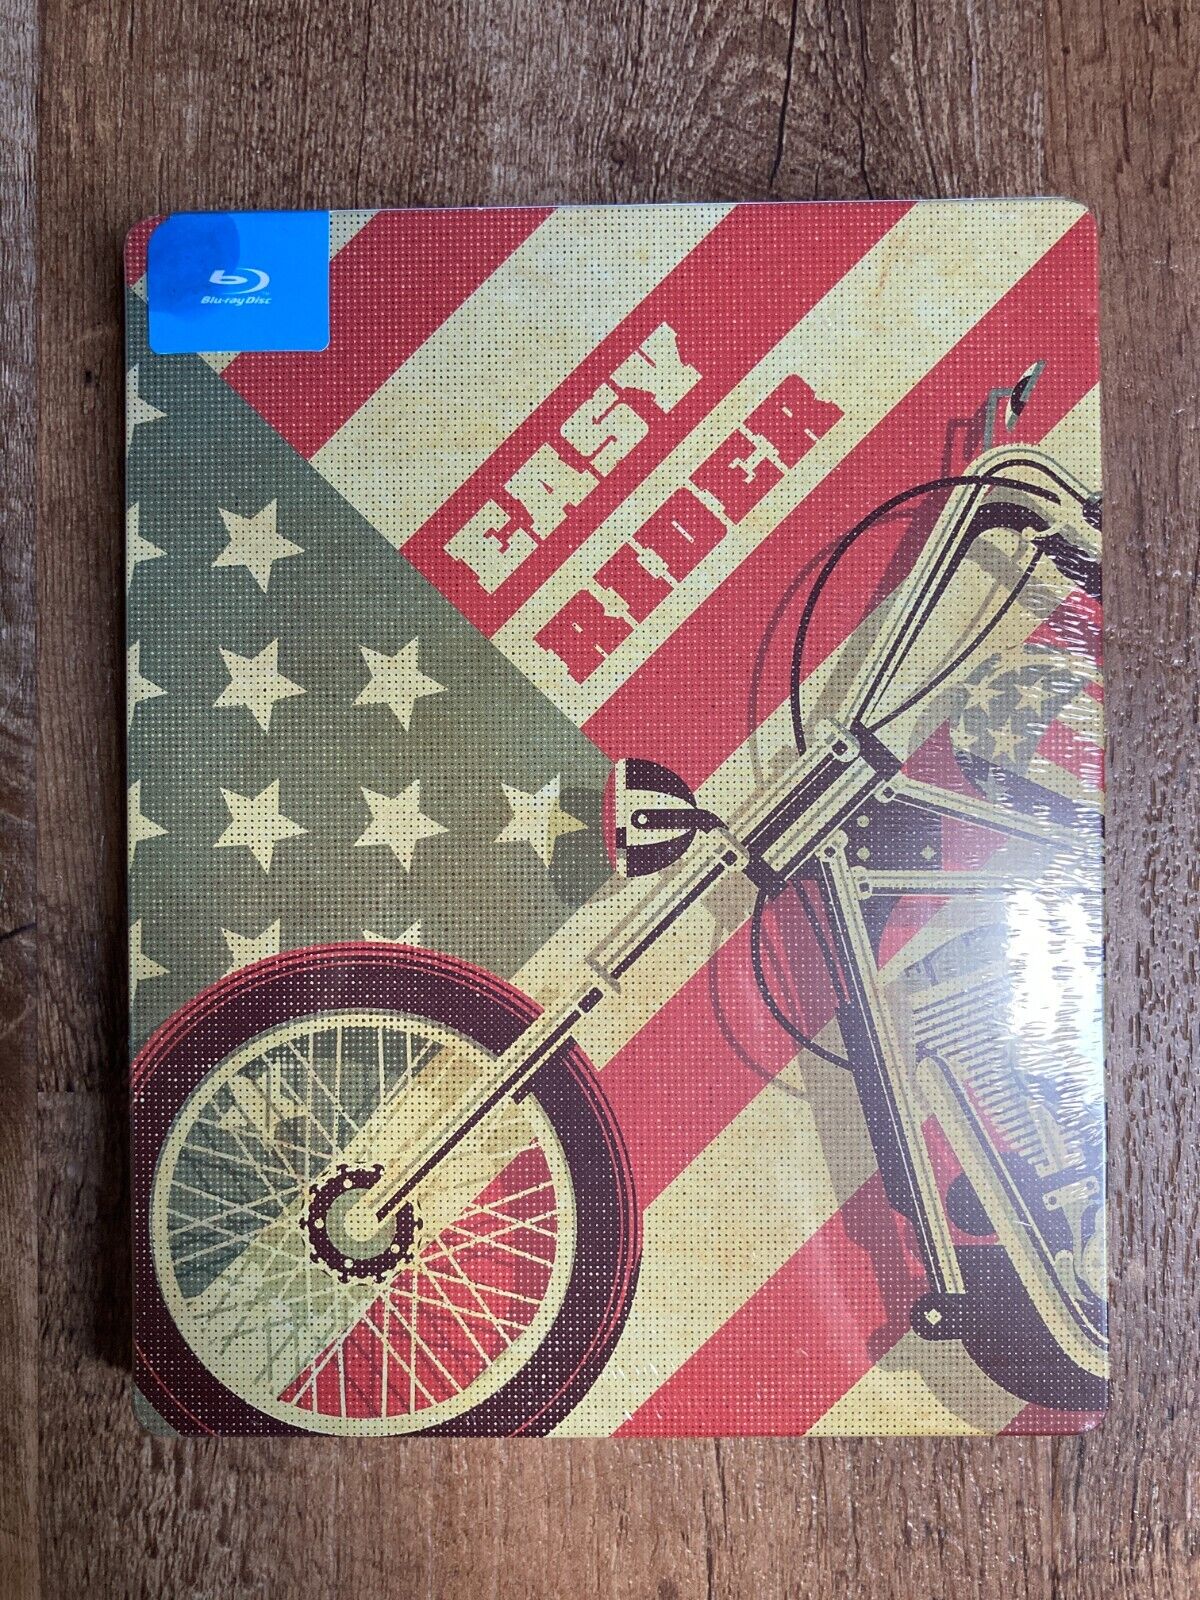 Easy Rider w. Steelbook Case (Blu-ray, 1969, Peter Fonda) *NEW/SEALED*